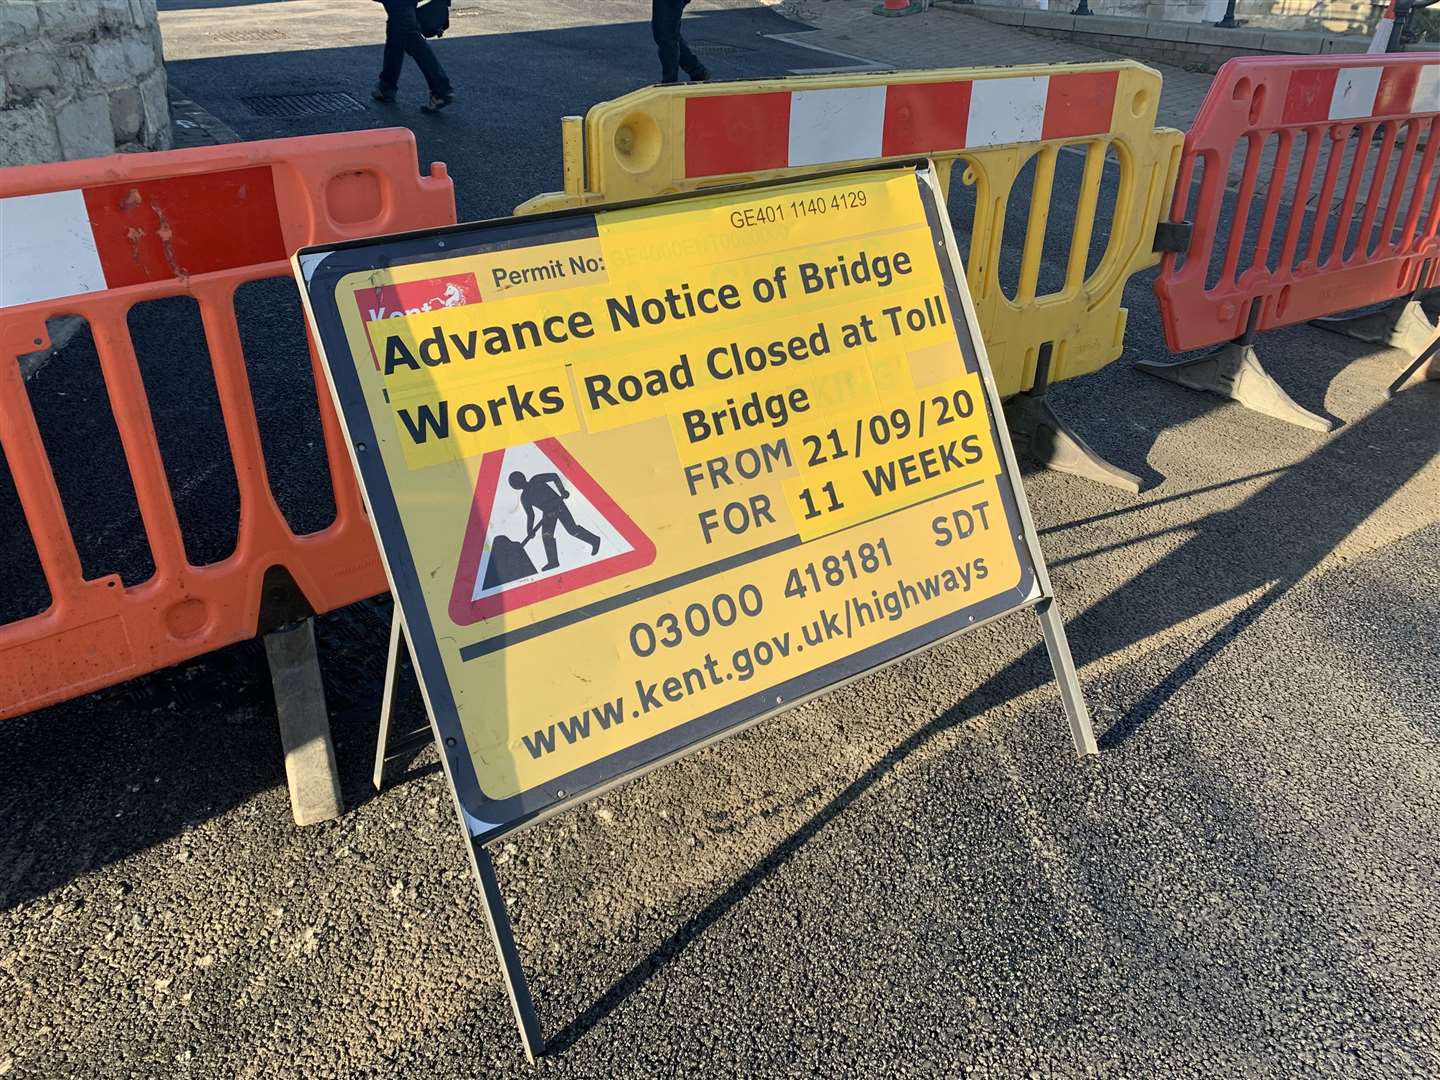 Sandwich Toll Bridge remains closed